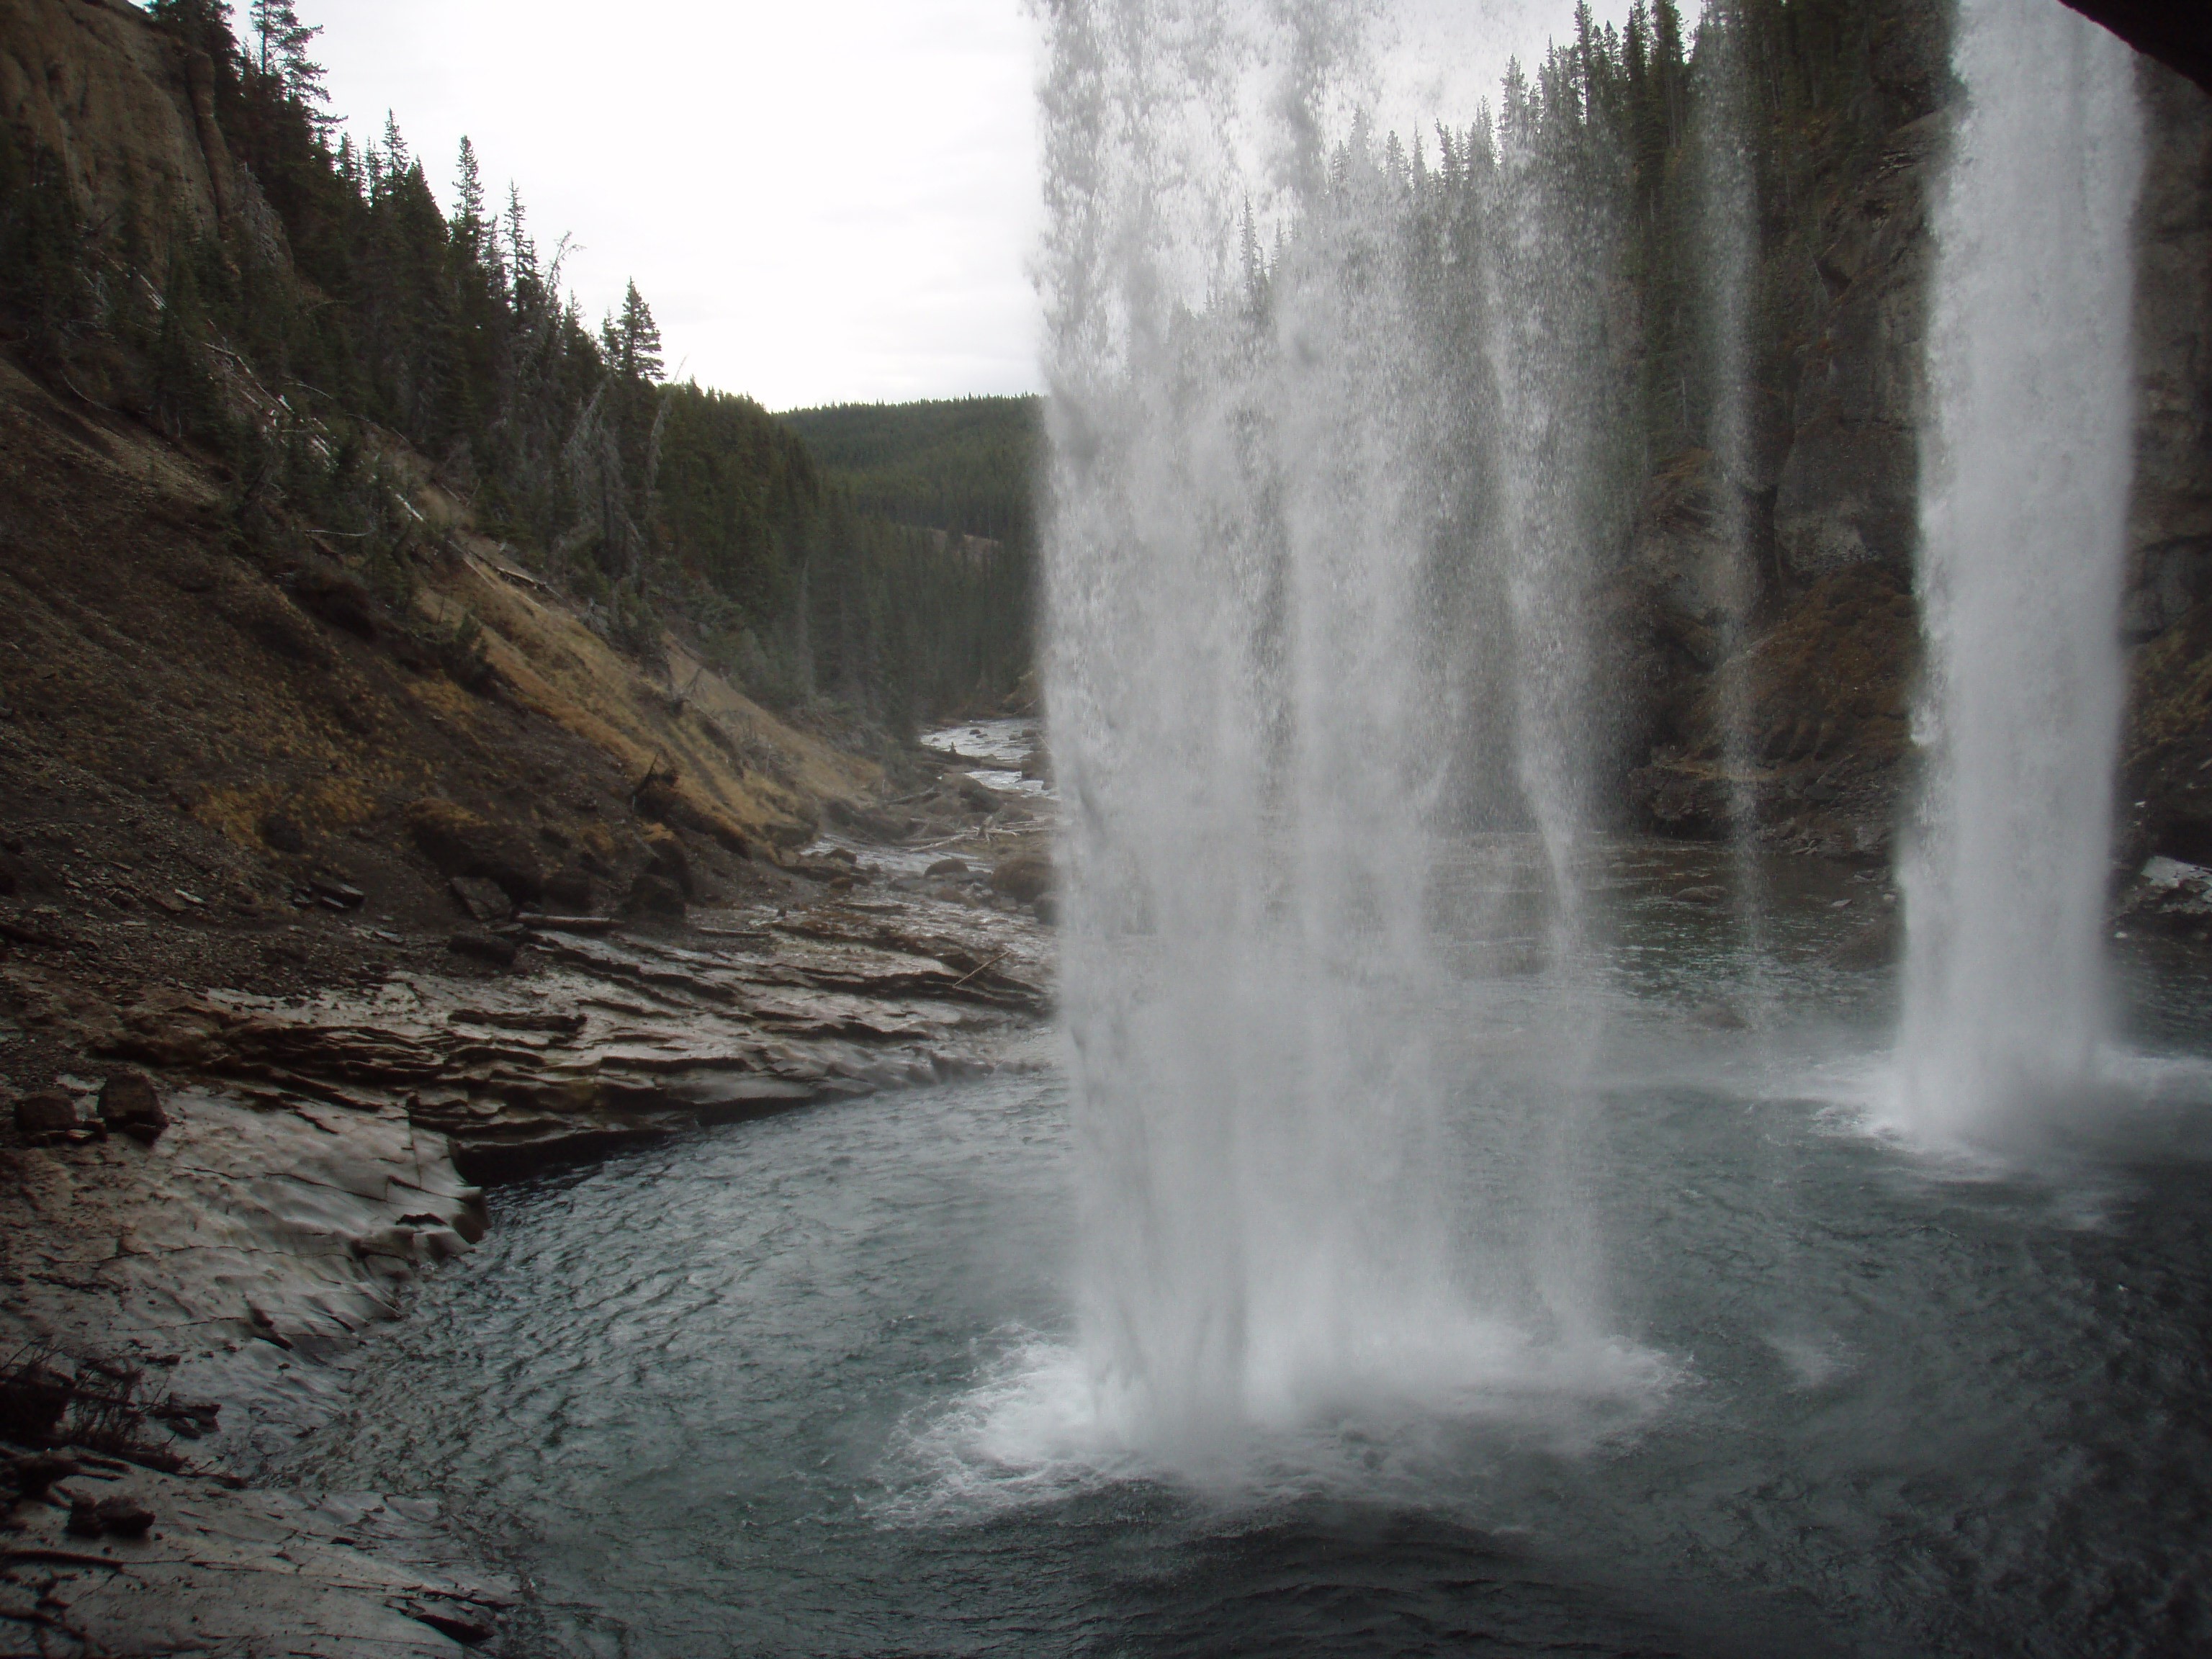 File:Canada waterfall.jpg - Wikimedia Commons